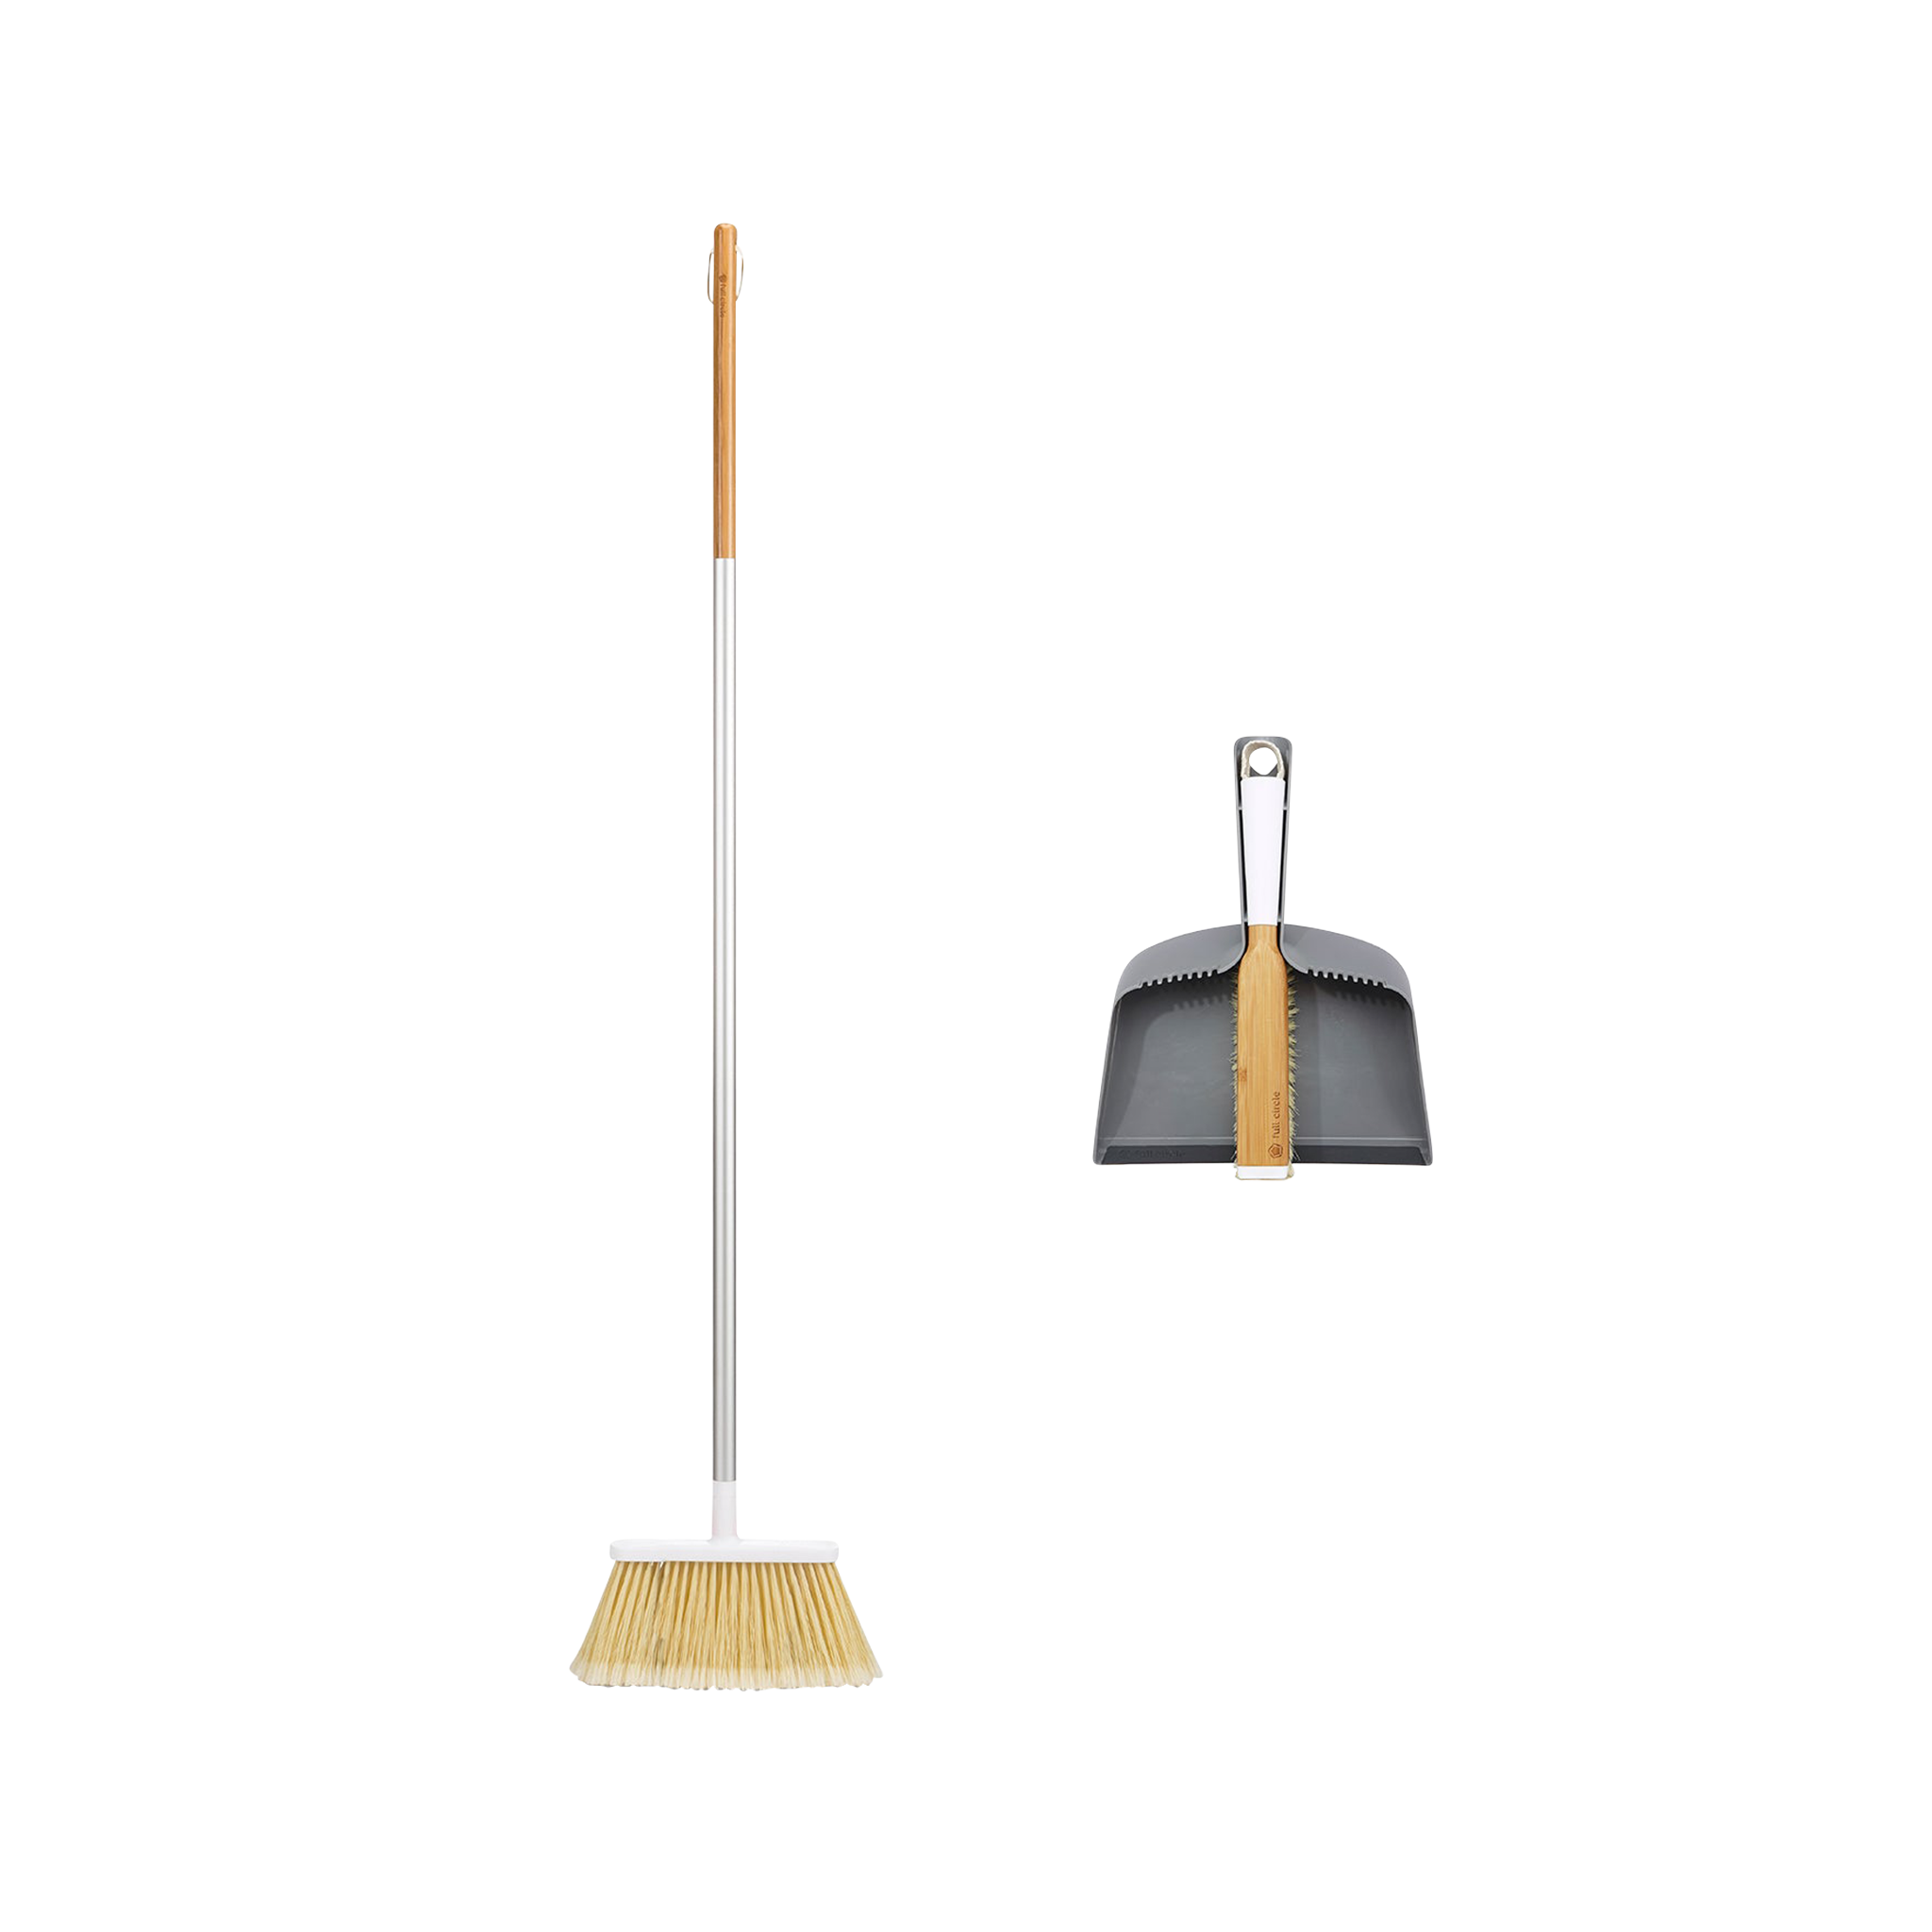 Broom And Dustpan Set